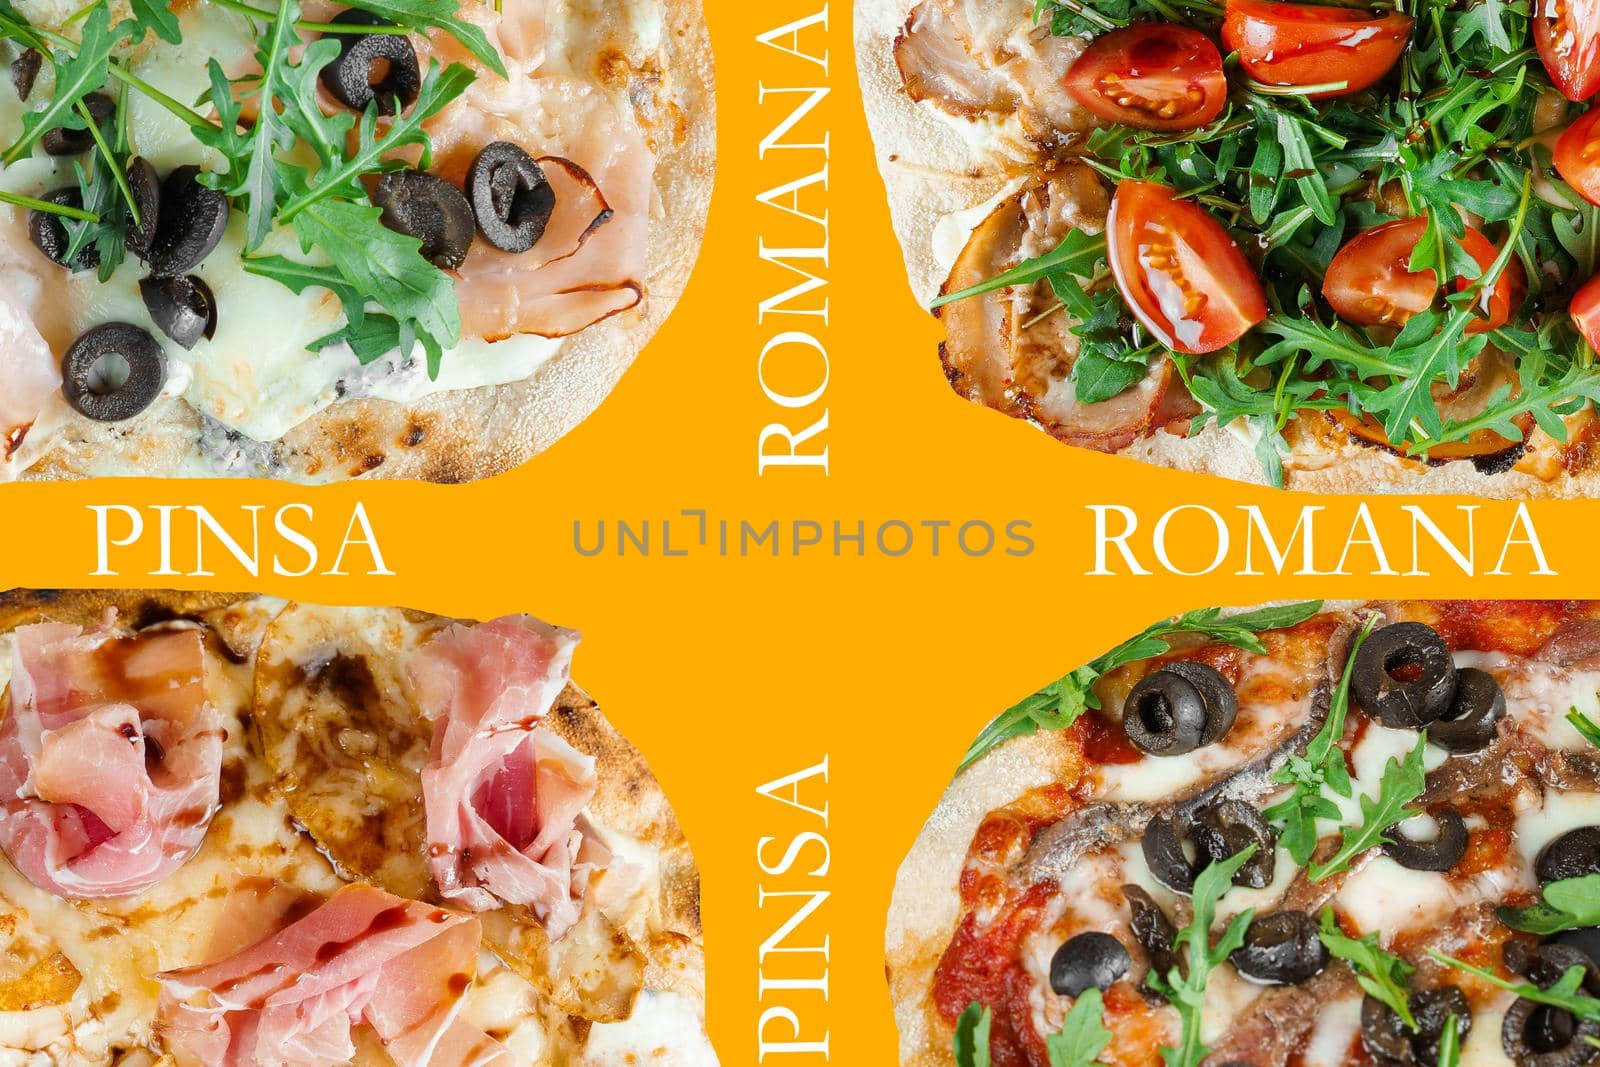 Pinsa romana gourmet italian cuisine on yellow background. Scrocchiarella. Food delivery from pizzeria